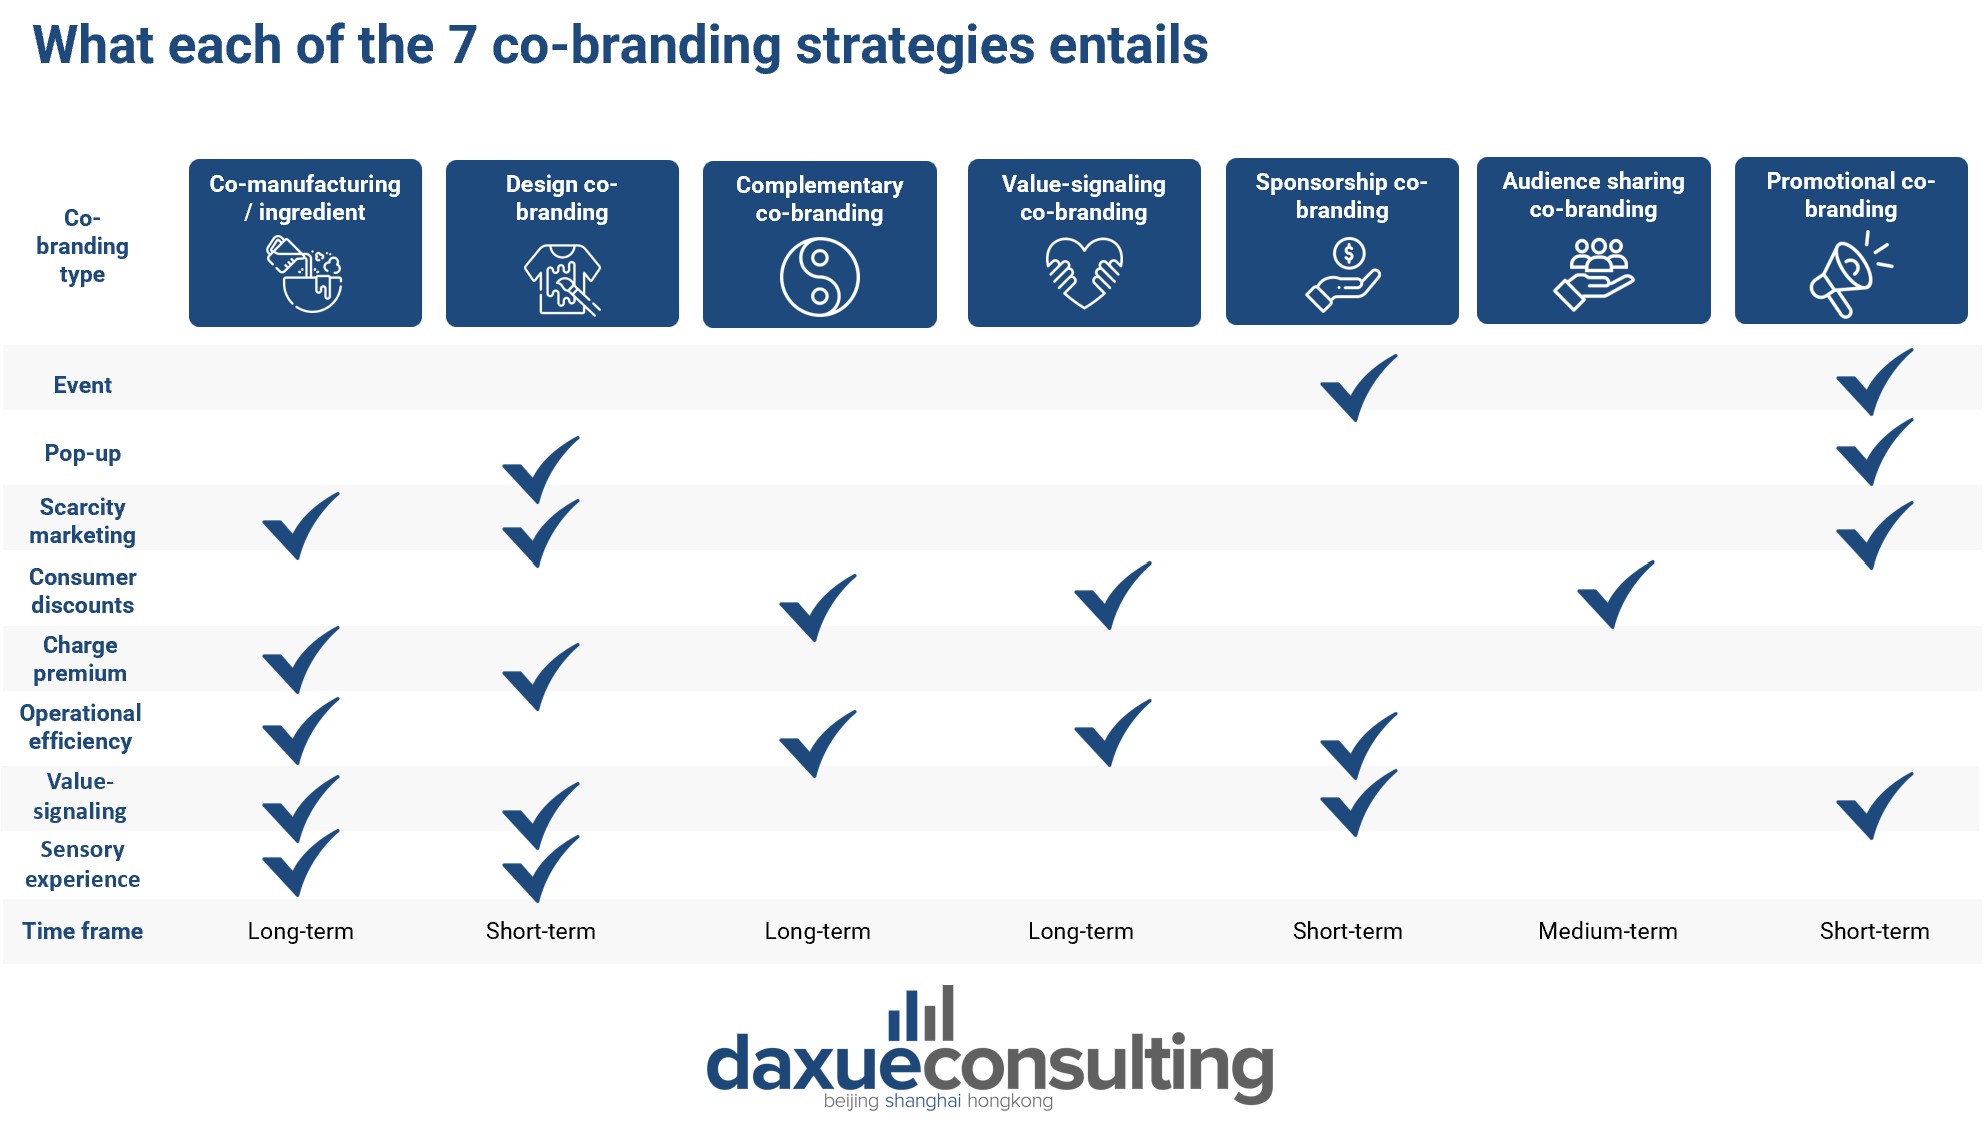 o-branding strategies accomplish which goals